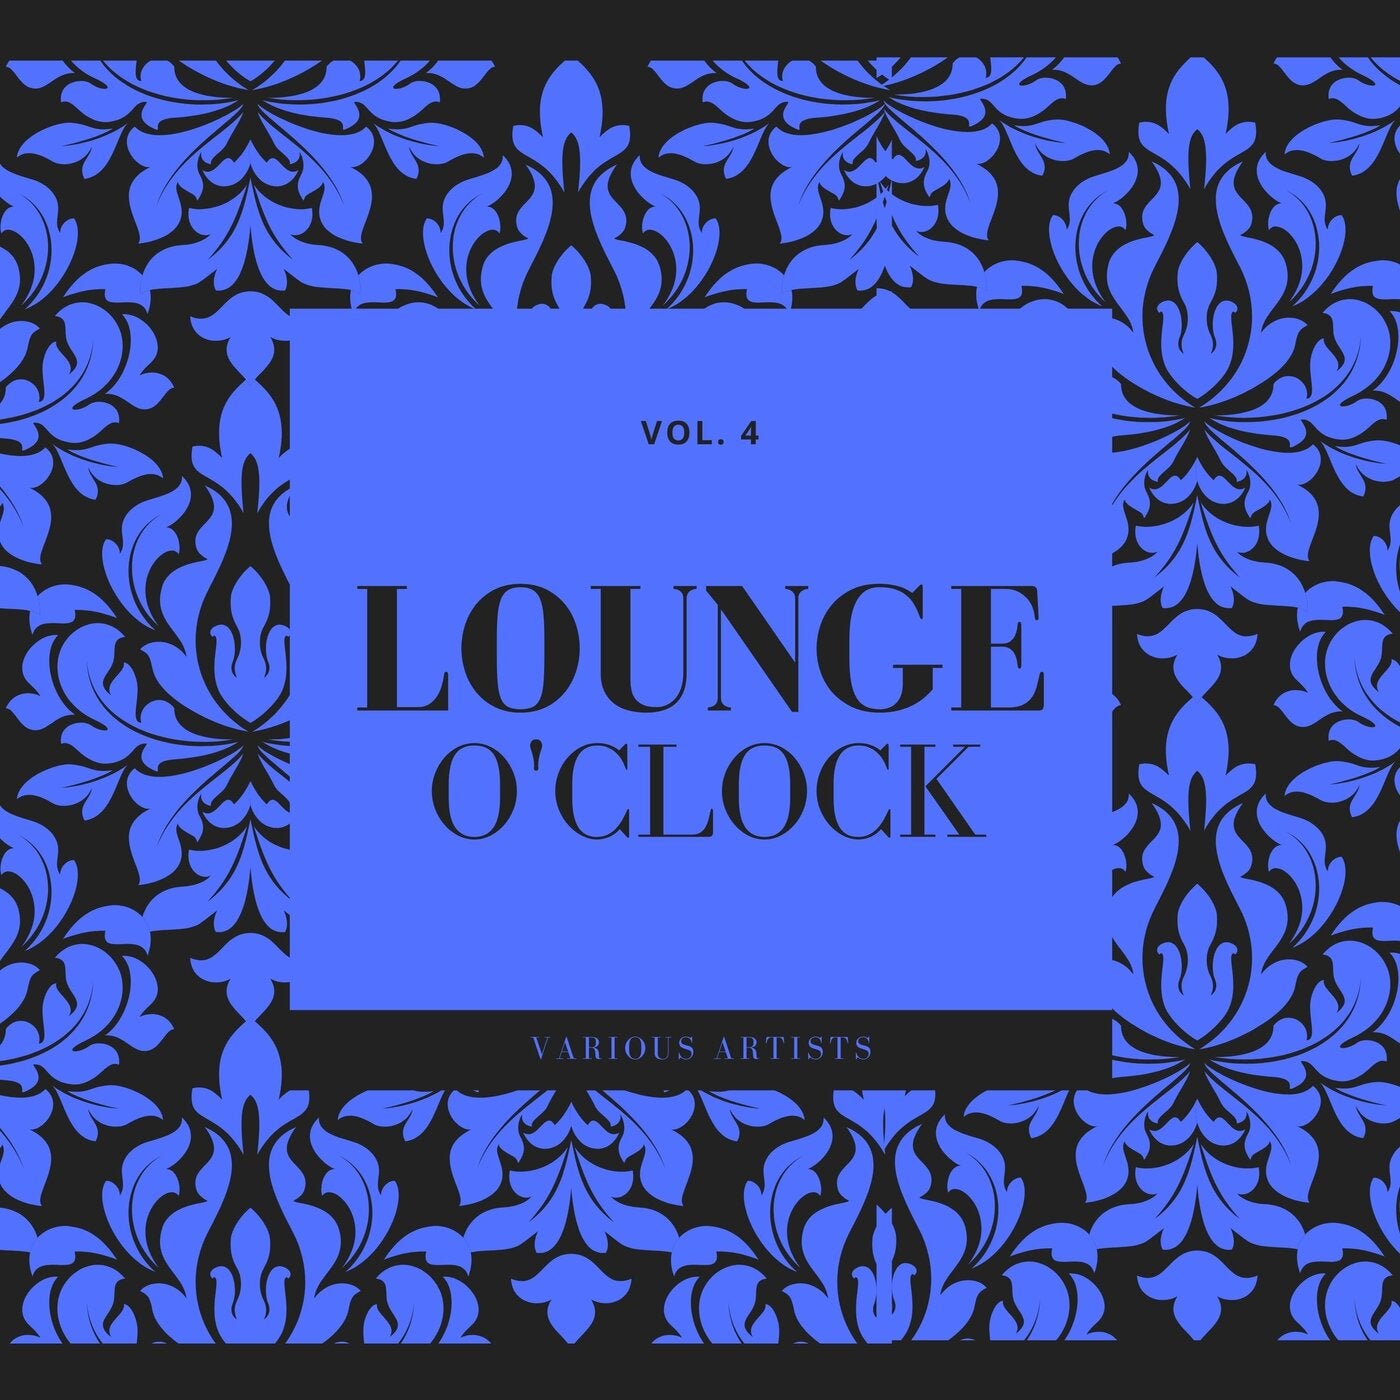 Lounge O'Clock, Vol. 4